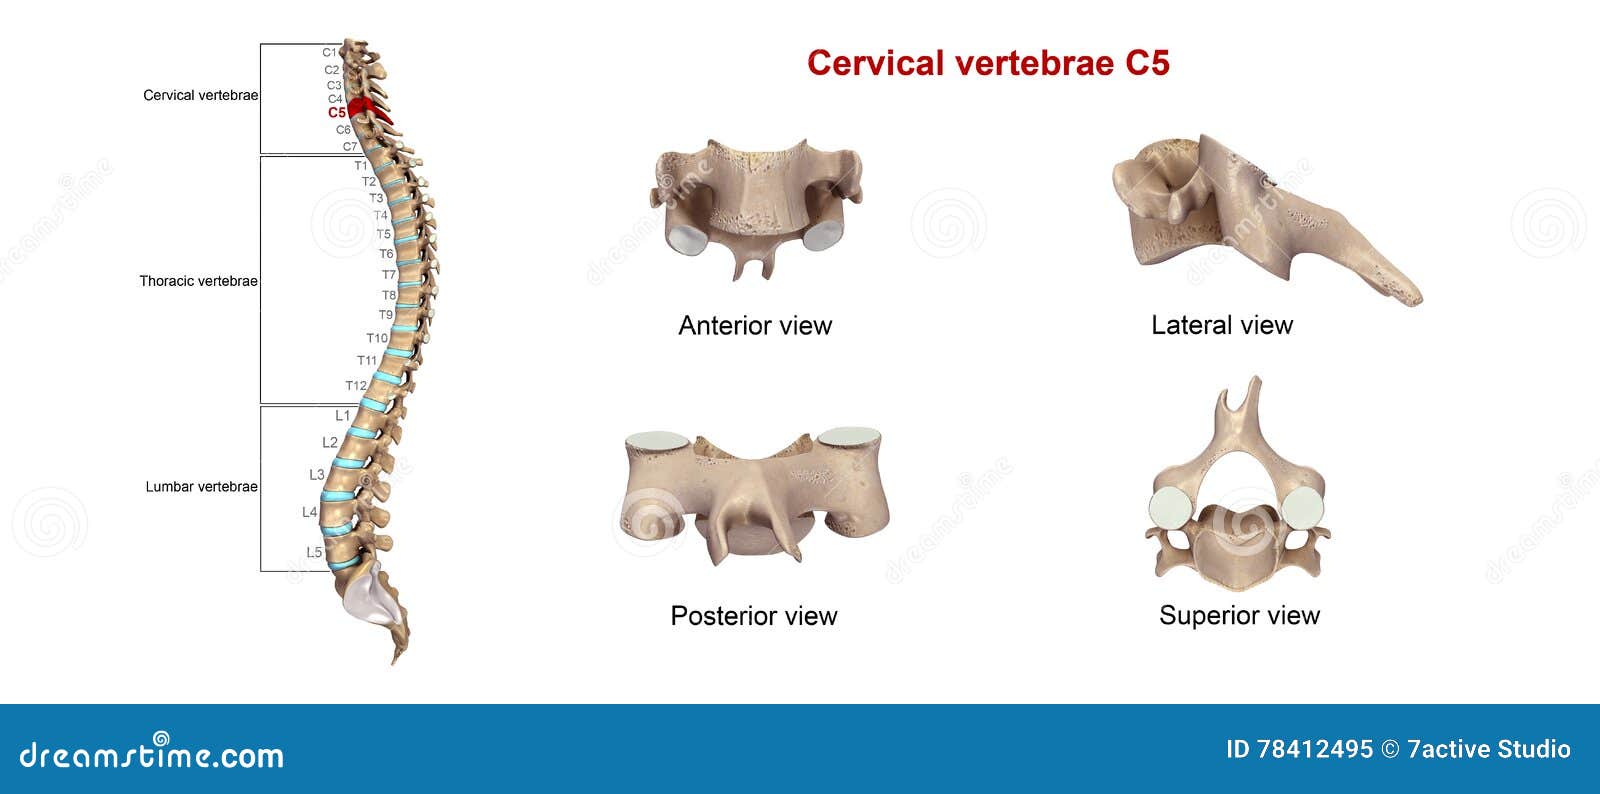 cervical vertebrae c5